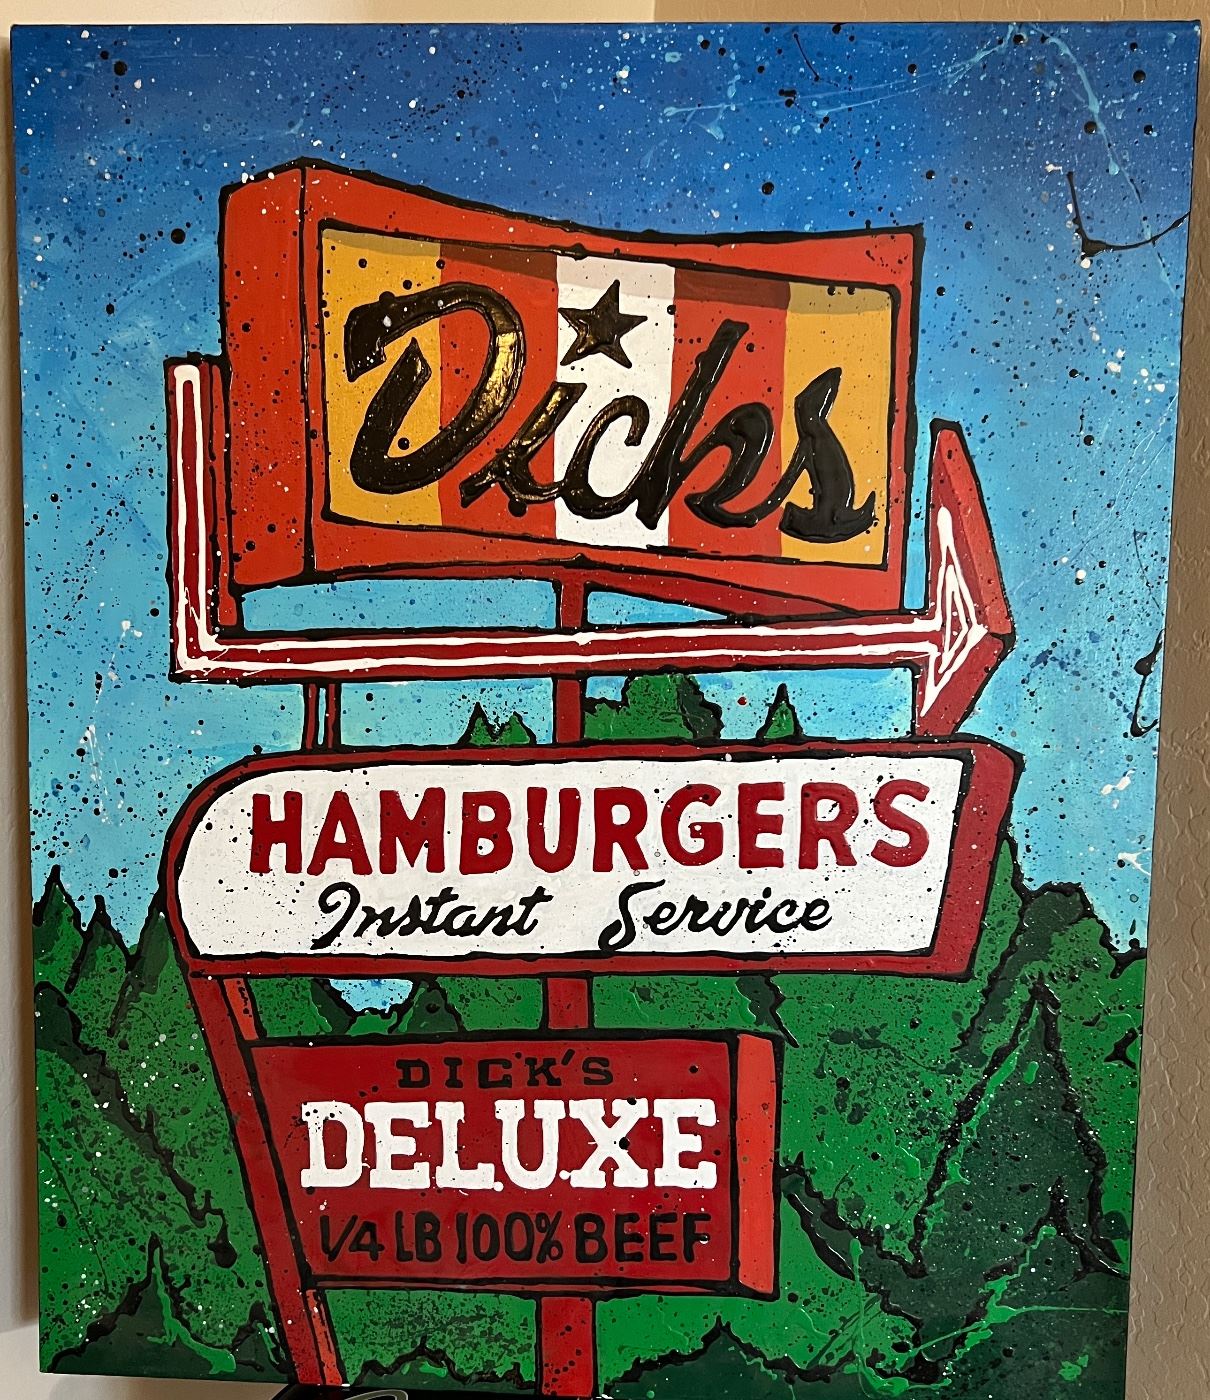 Dick's Hamburgers Original Canvas Art